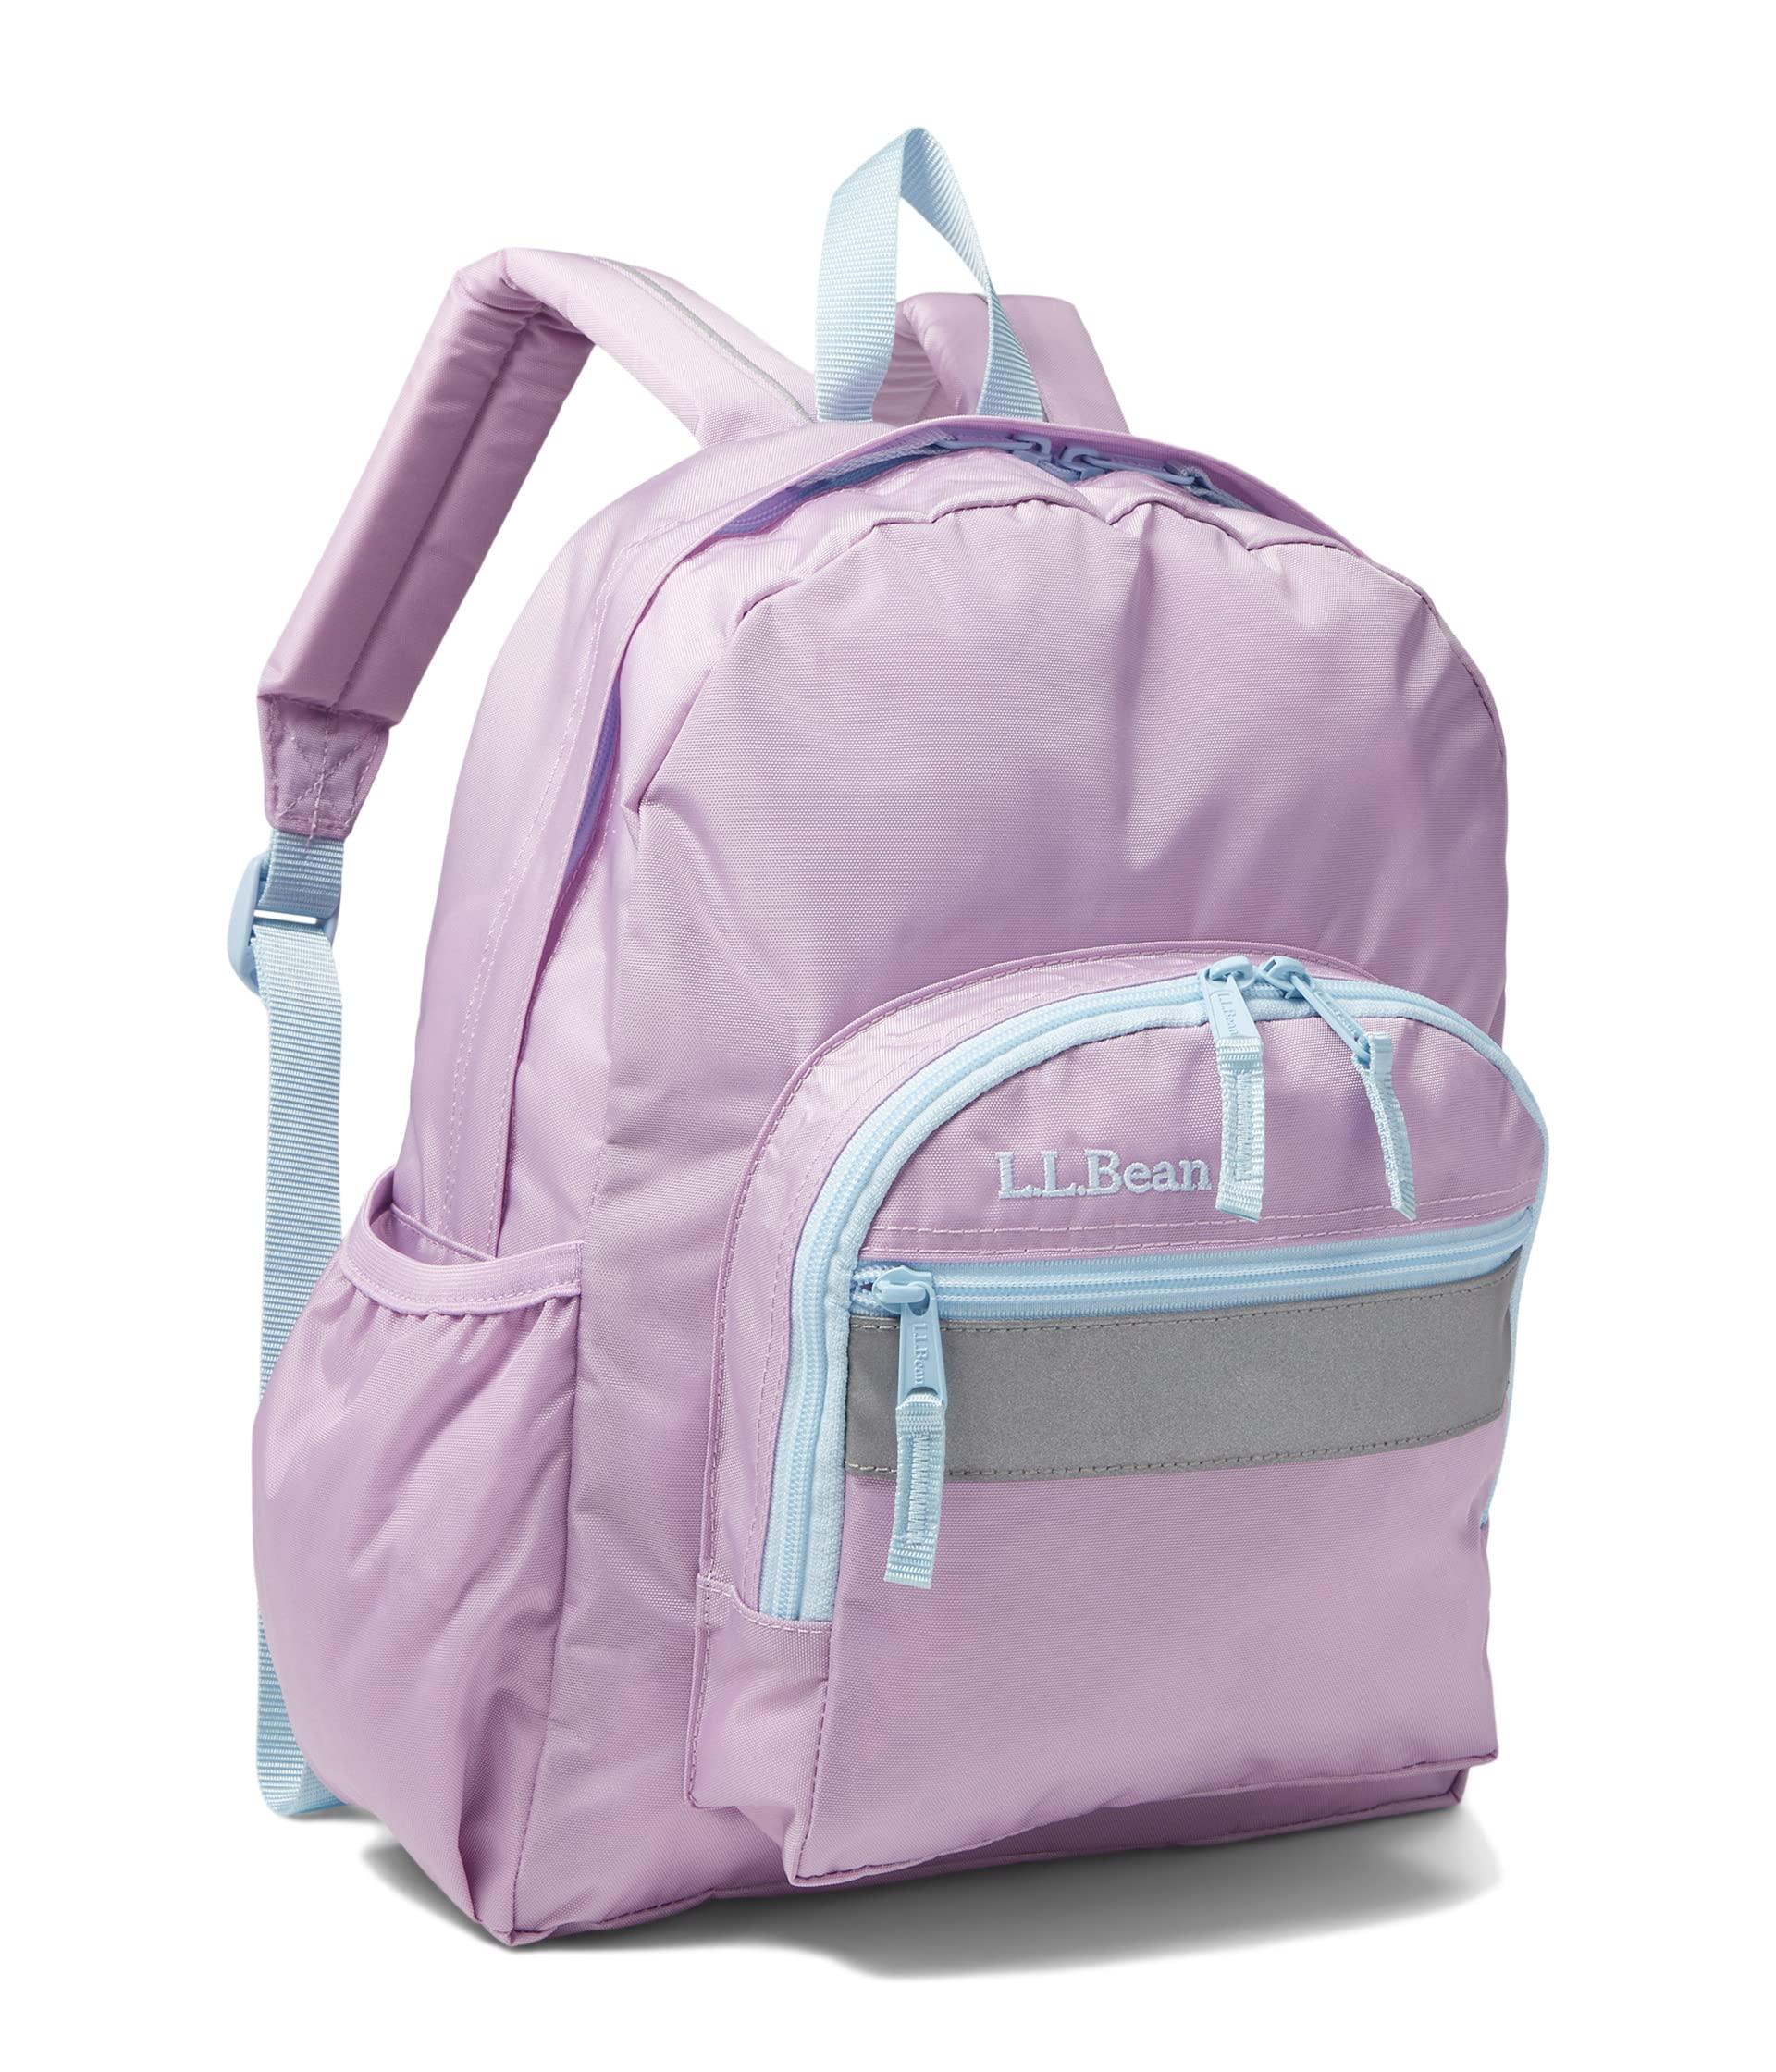 https://cdna.lystit.com/photos/zappos/9bc4b663/ll-bean-Purple-Kids-Junior-Backpack.jpeg